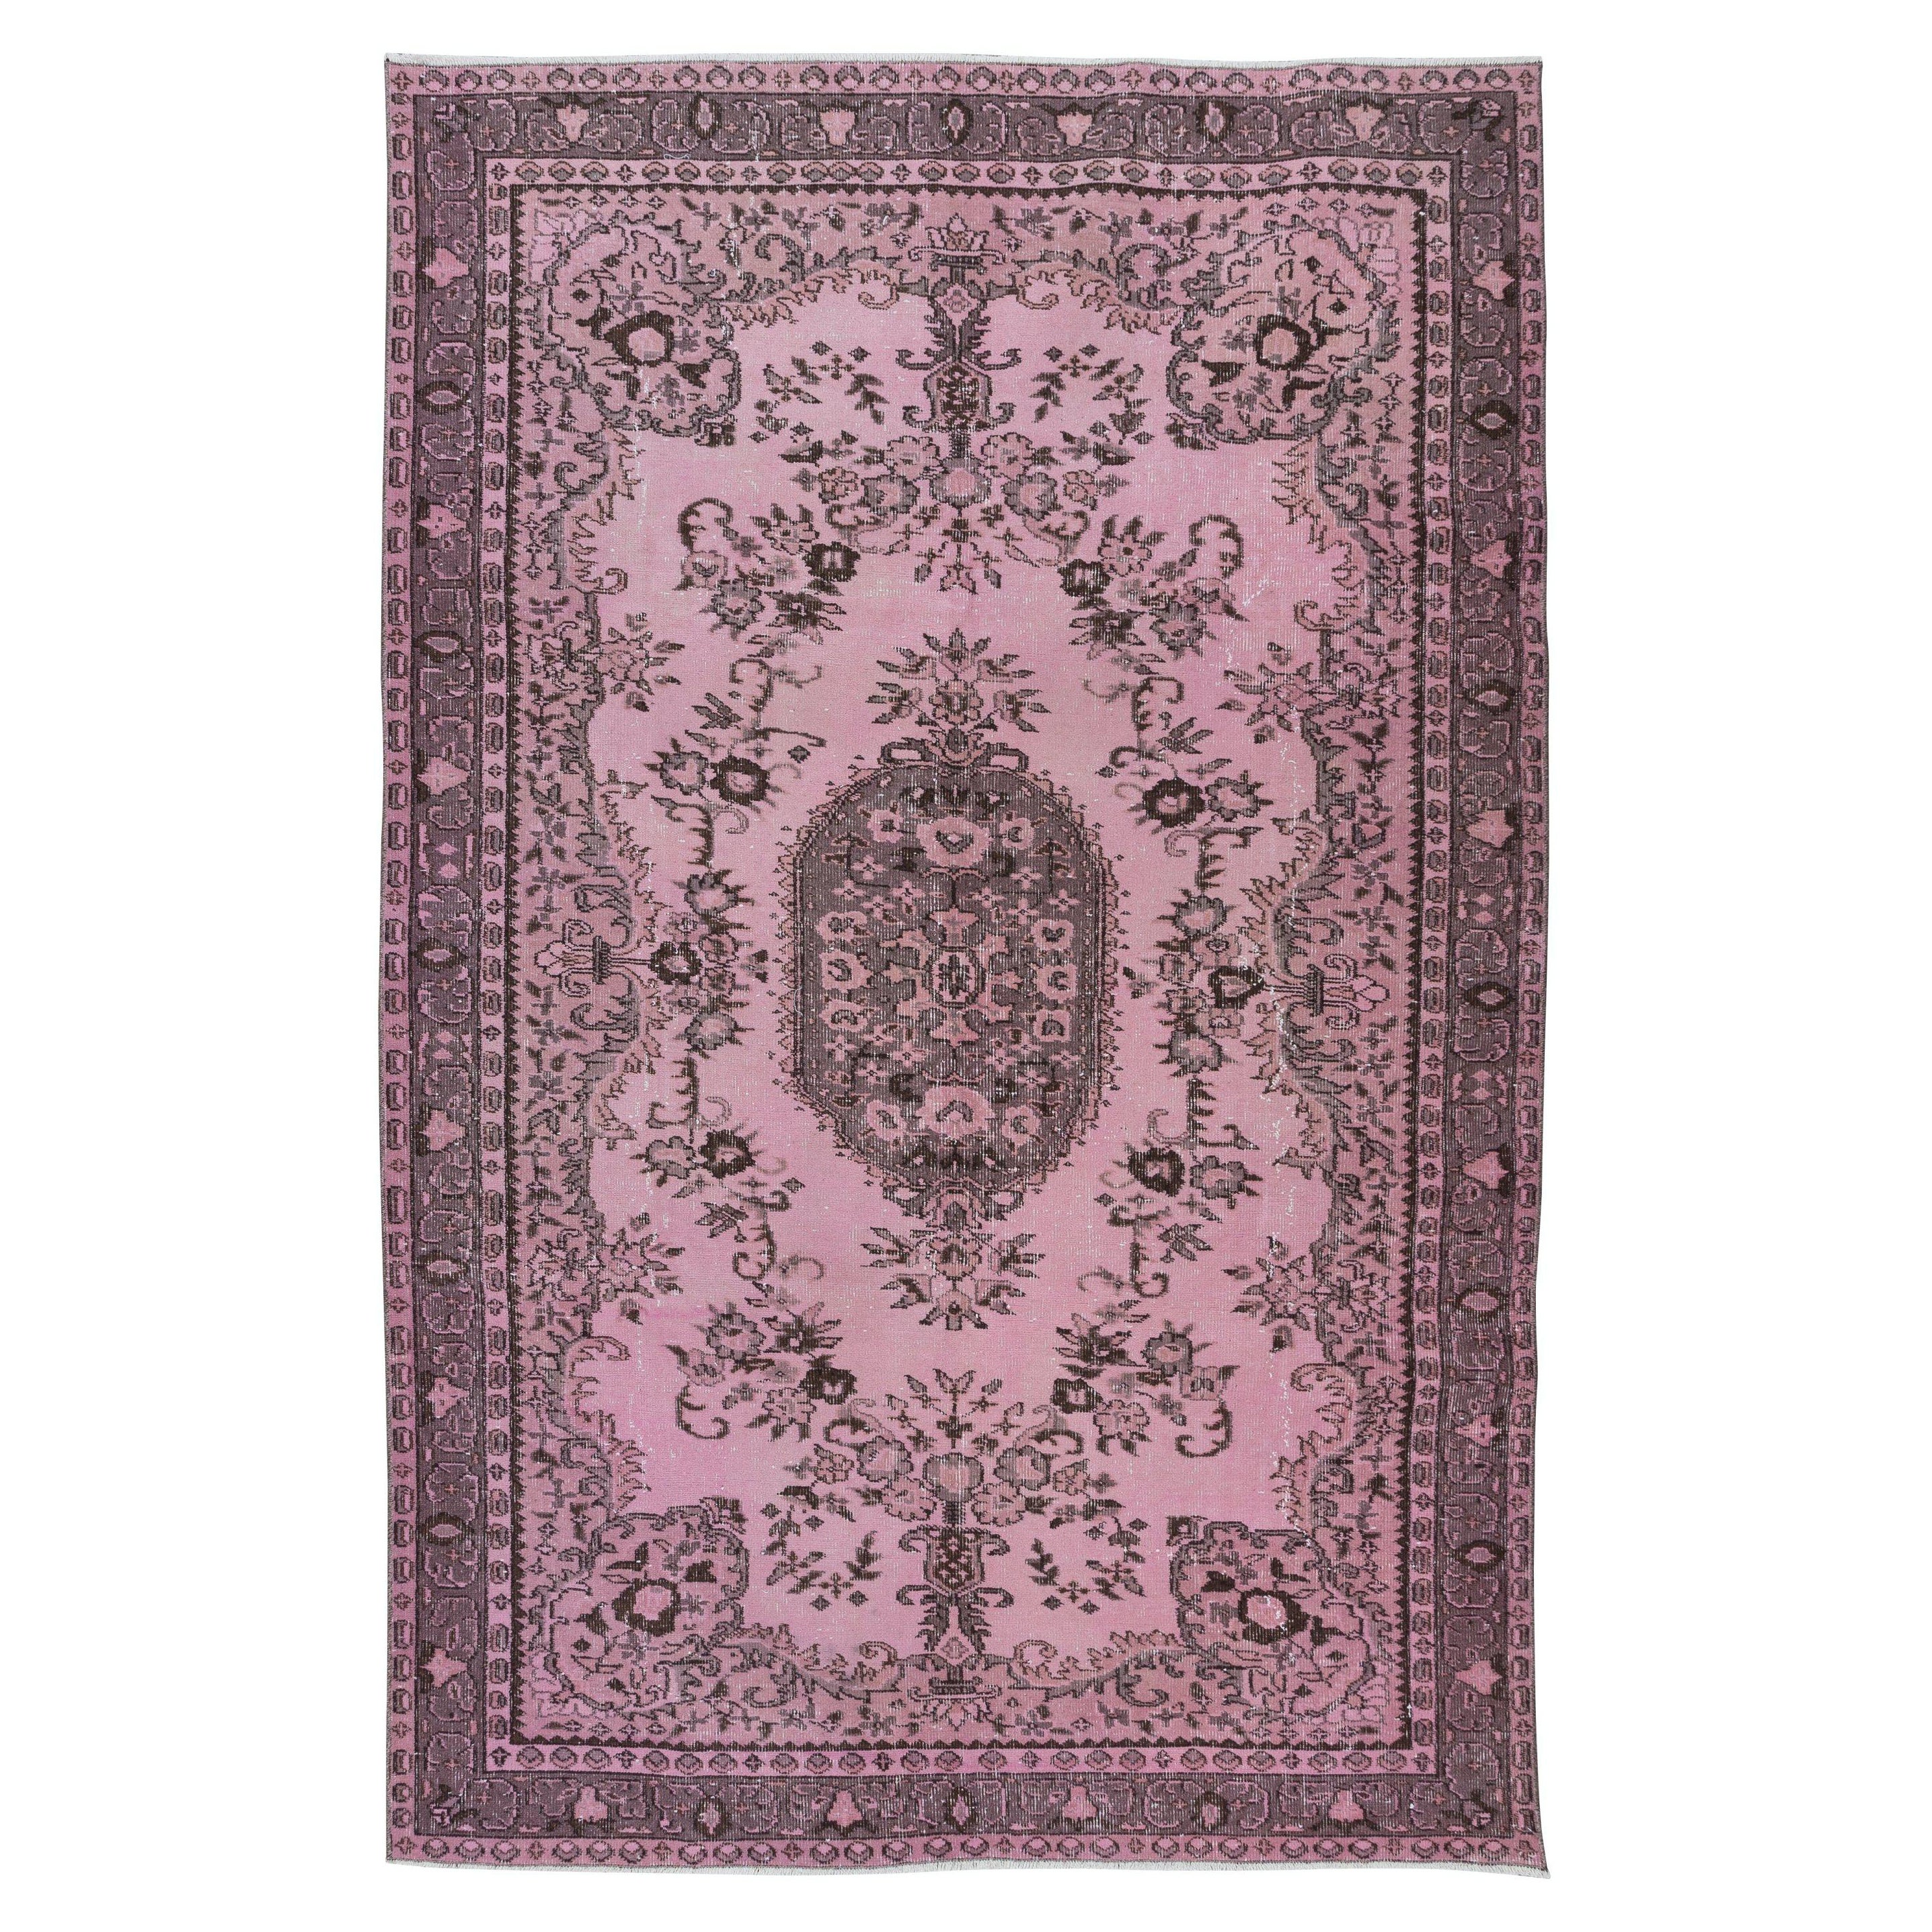 5.6x8.6 Ft Pink Area Rug for Modern Interior, Handmade Turkish Decorative Carpet (Tapis turc décoratif fait à la main)